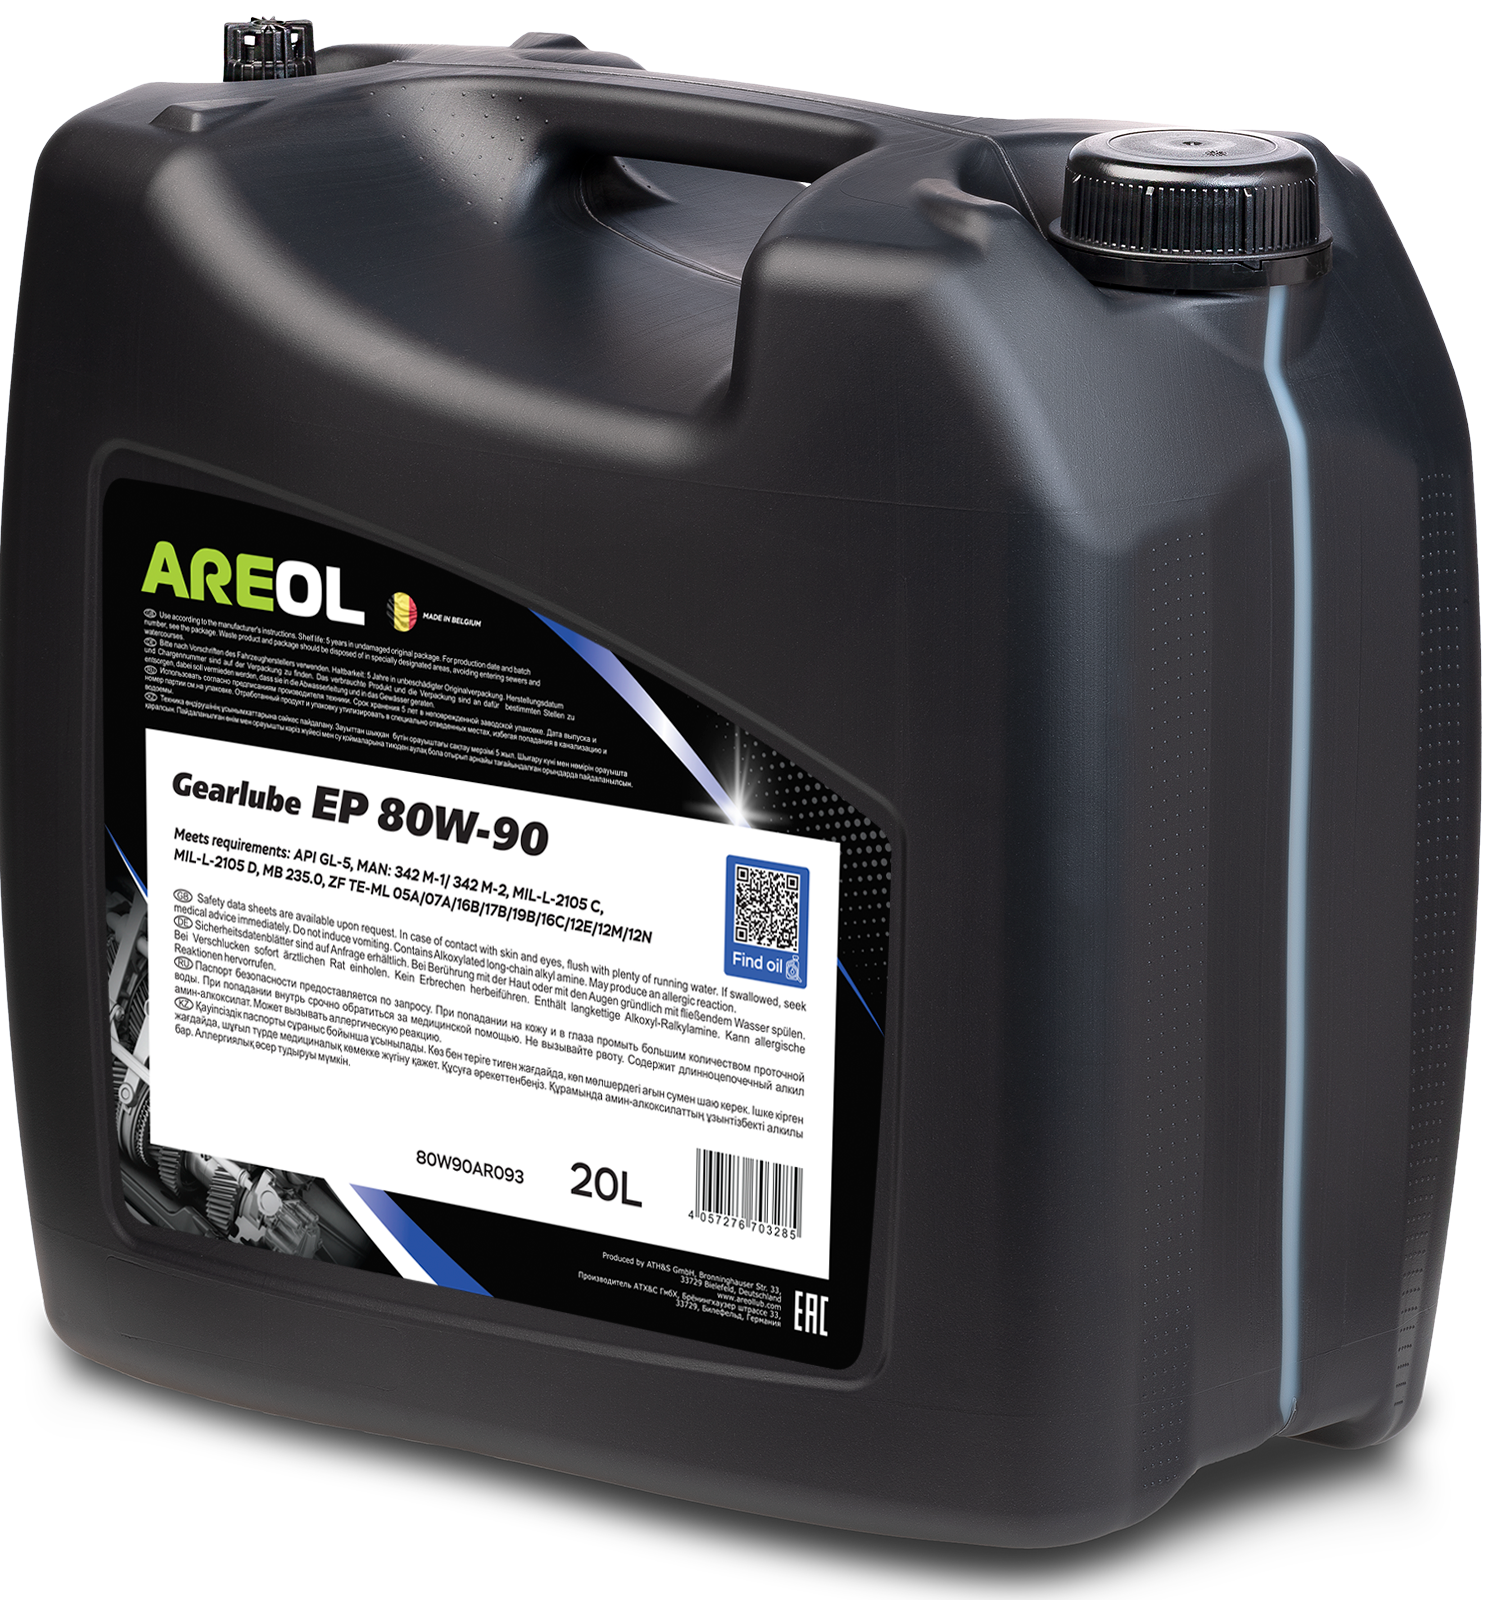 Gear Oil AREOL Gearlube EP 80W-90 20L